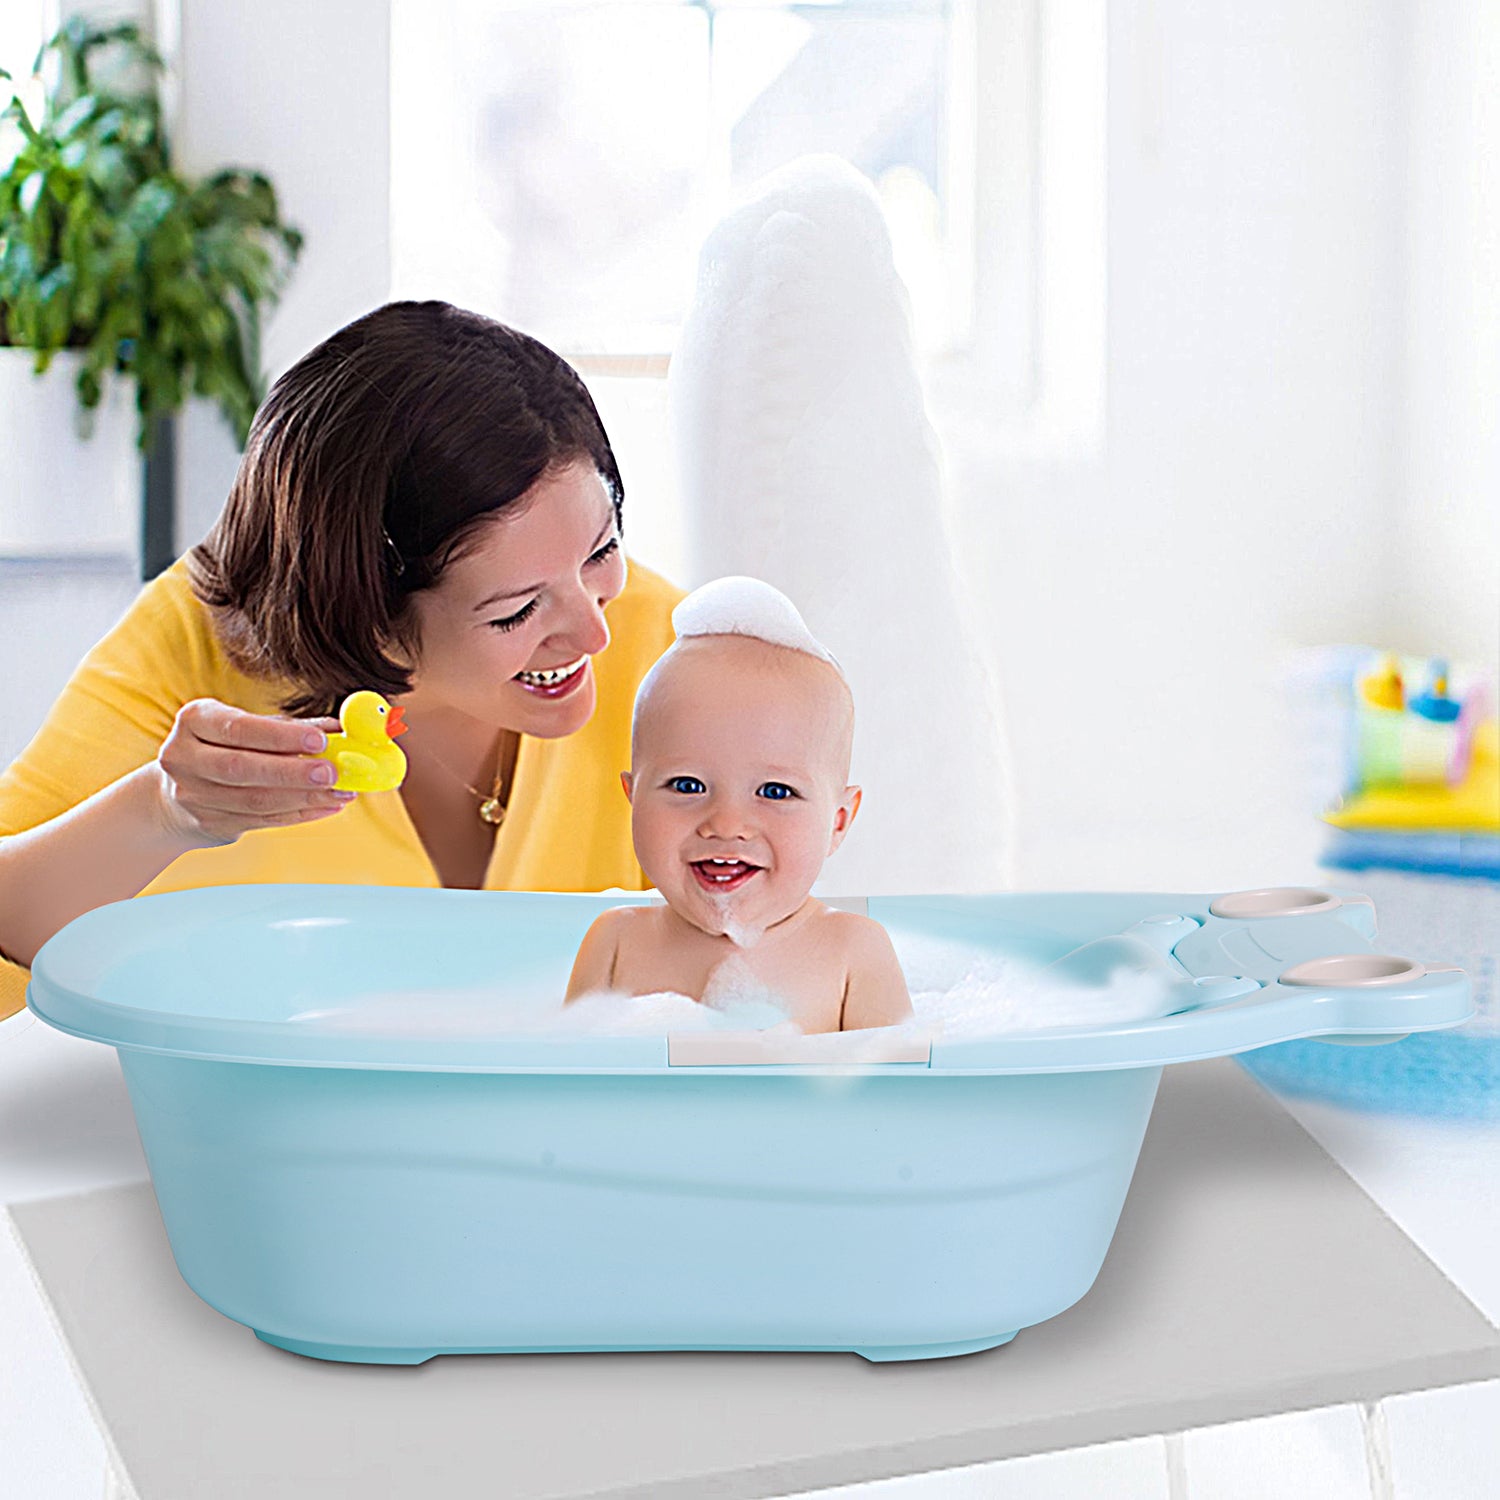 Baby Moo Bath Tub With Bather And Drain Plug Animal Face Blue